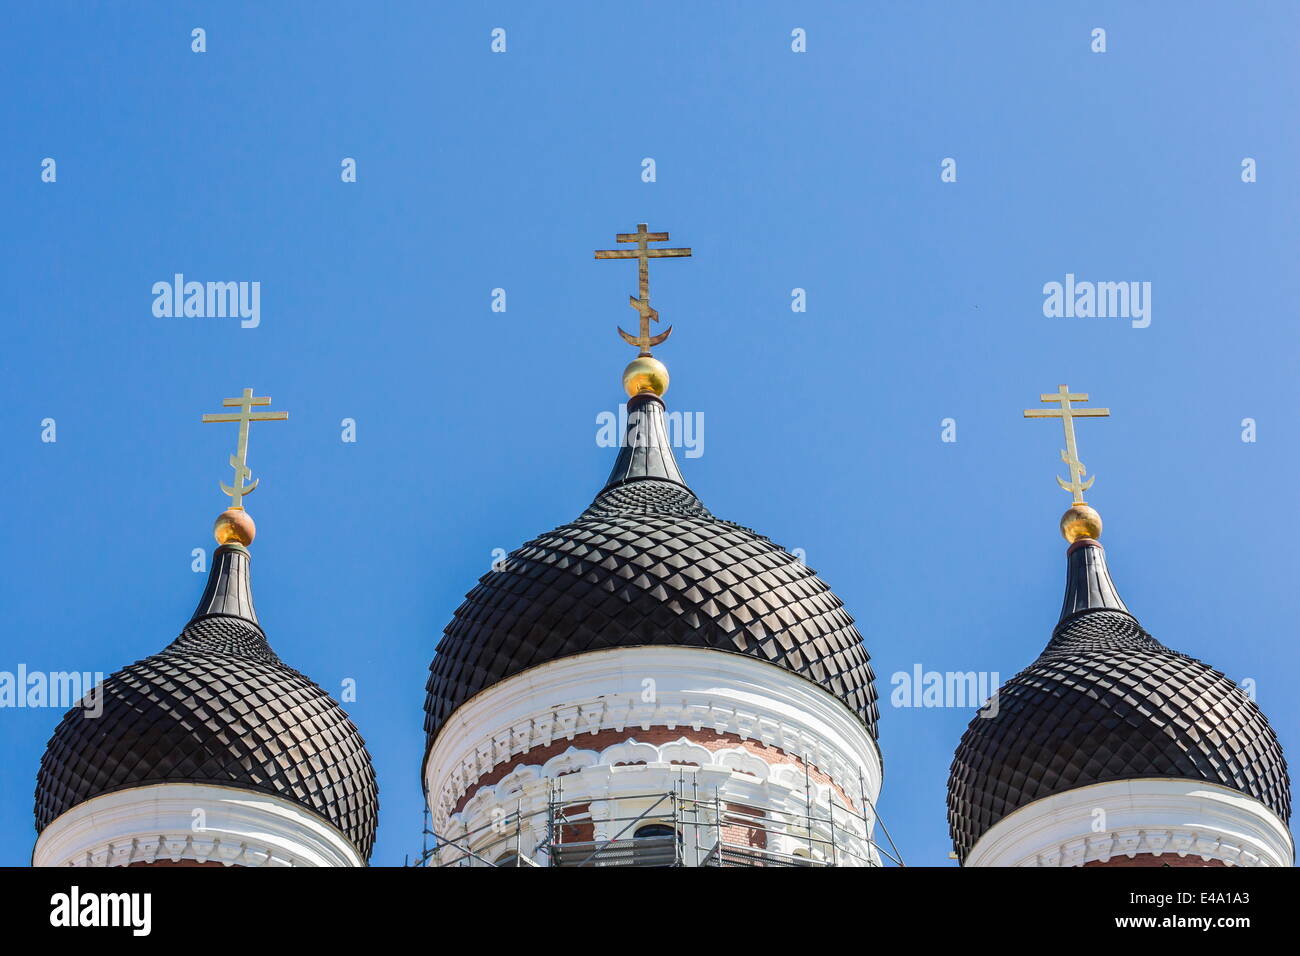 Orthodox church domed spires in the capital city of Tallinn, Estonia, Europe Stock Photo